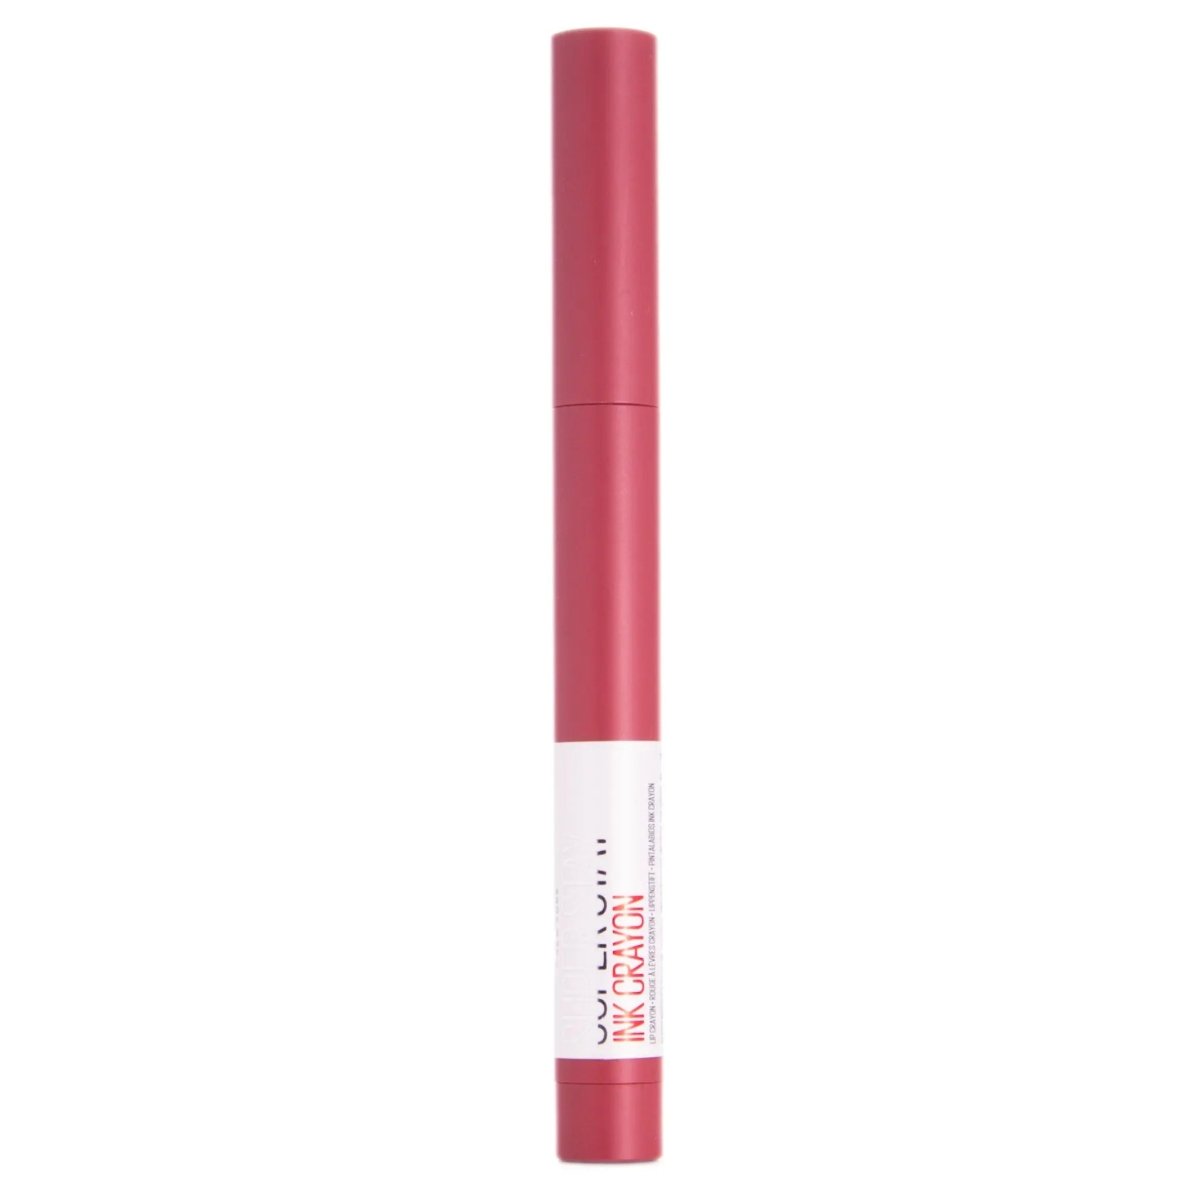 Image of Superstay Matte Ink Crayon Lipstick